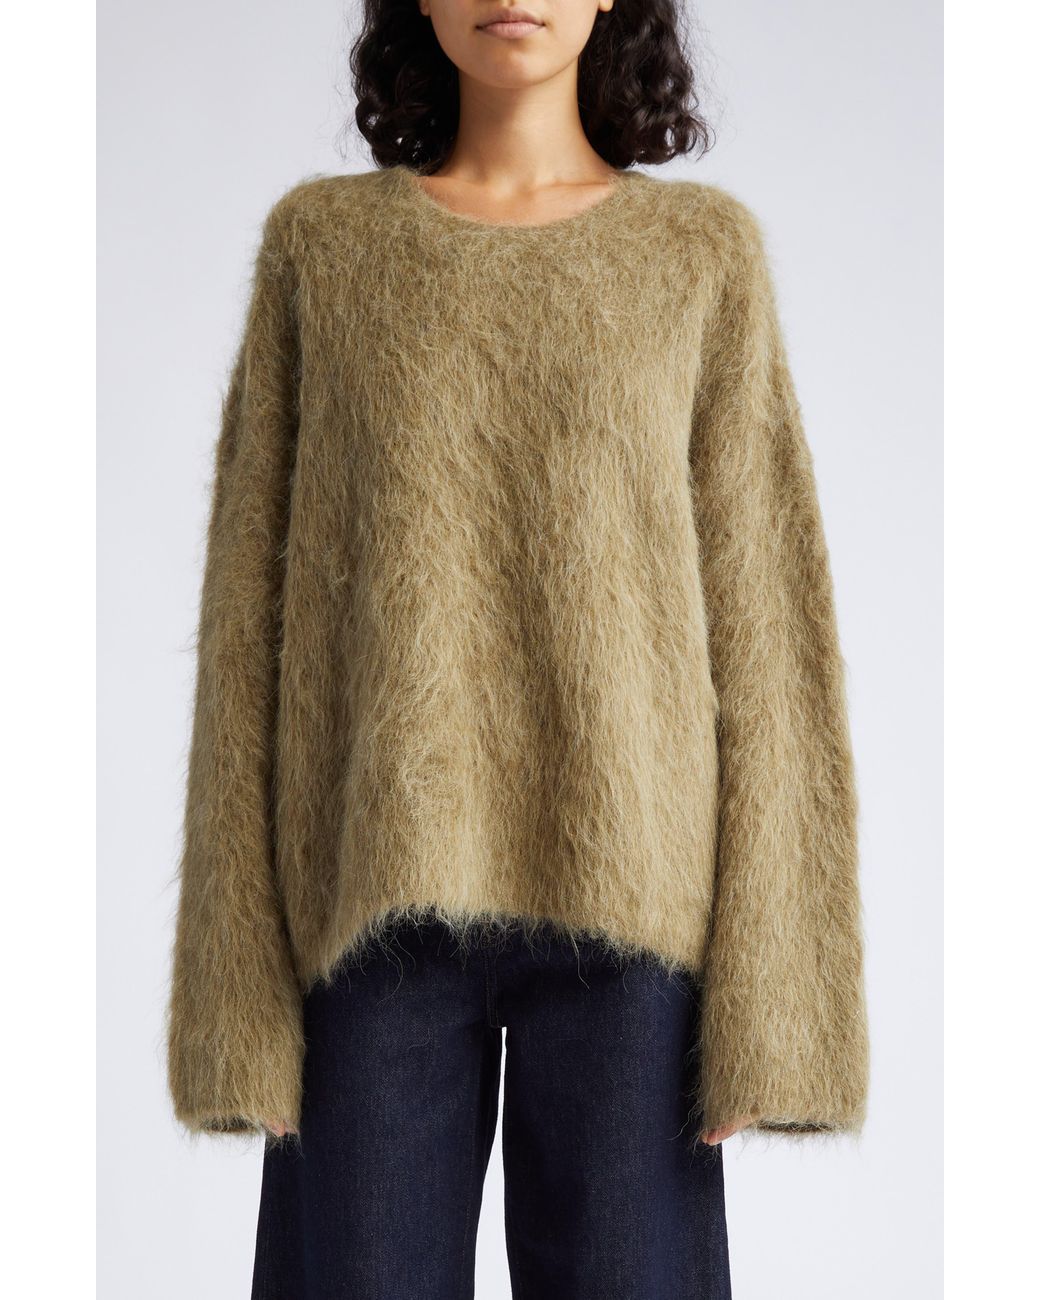 Totême Alpaca Knit Boxy Sweater in Natural | Lyst